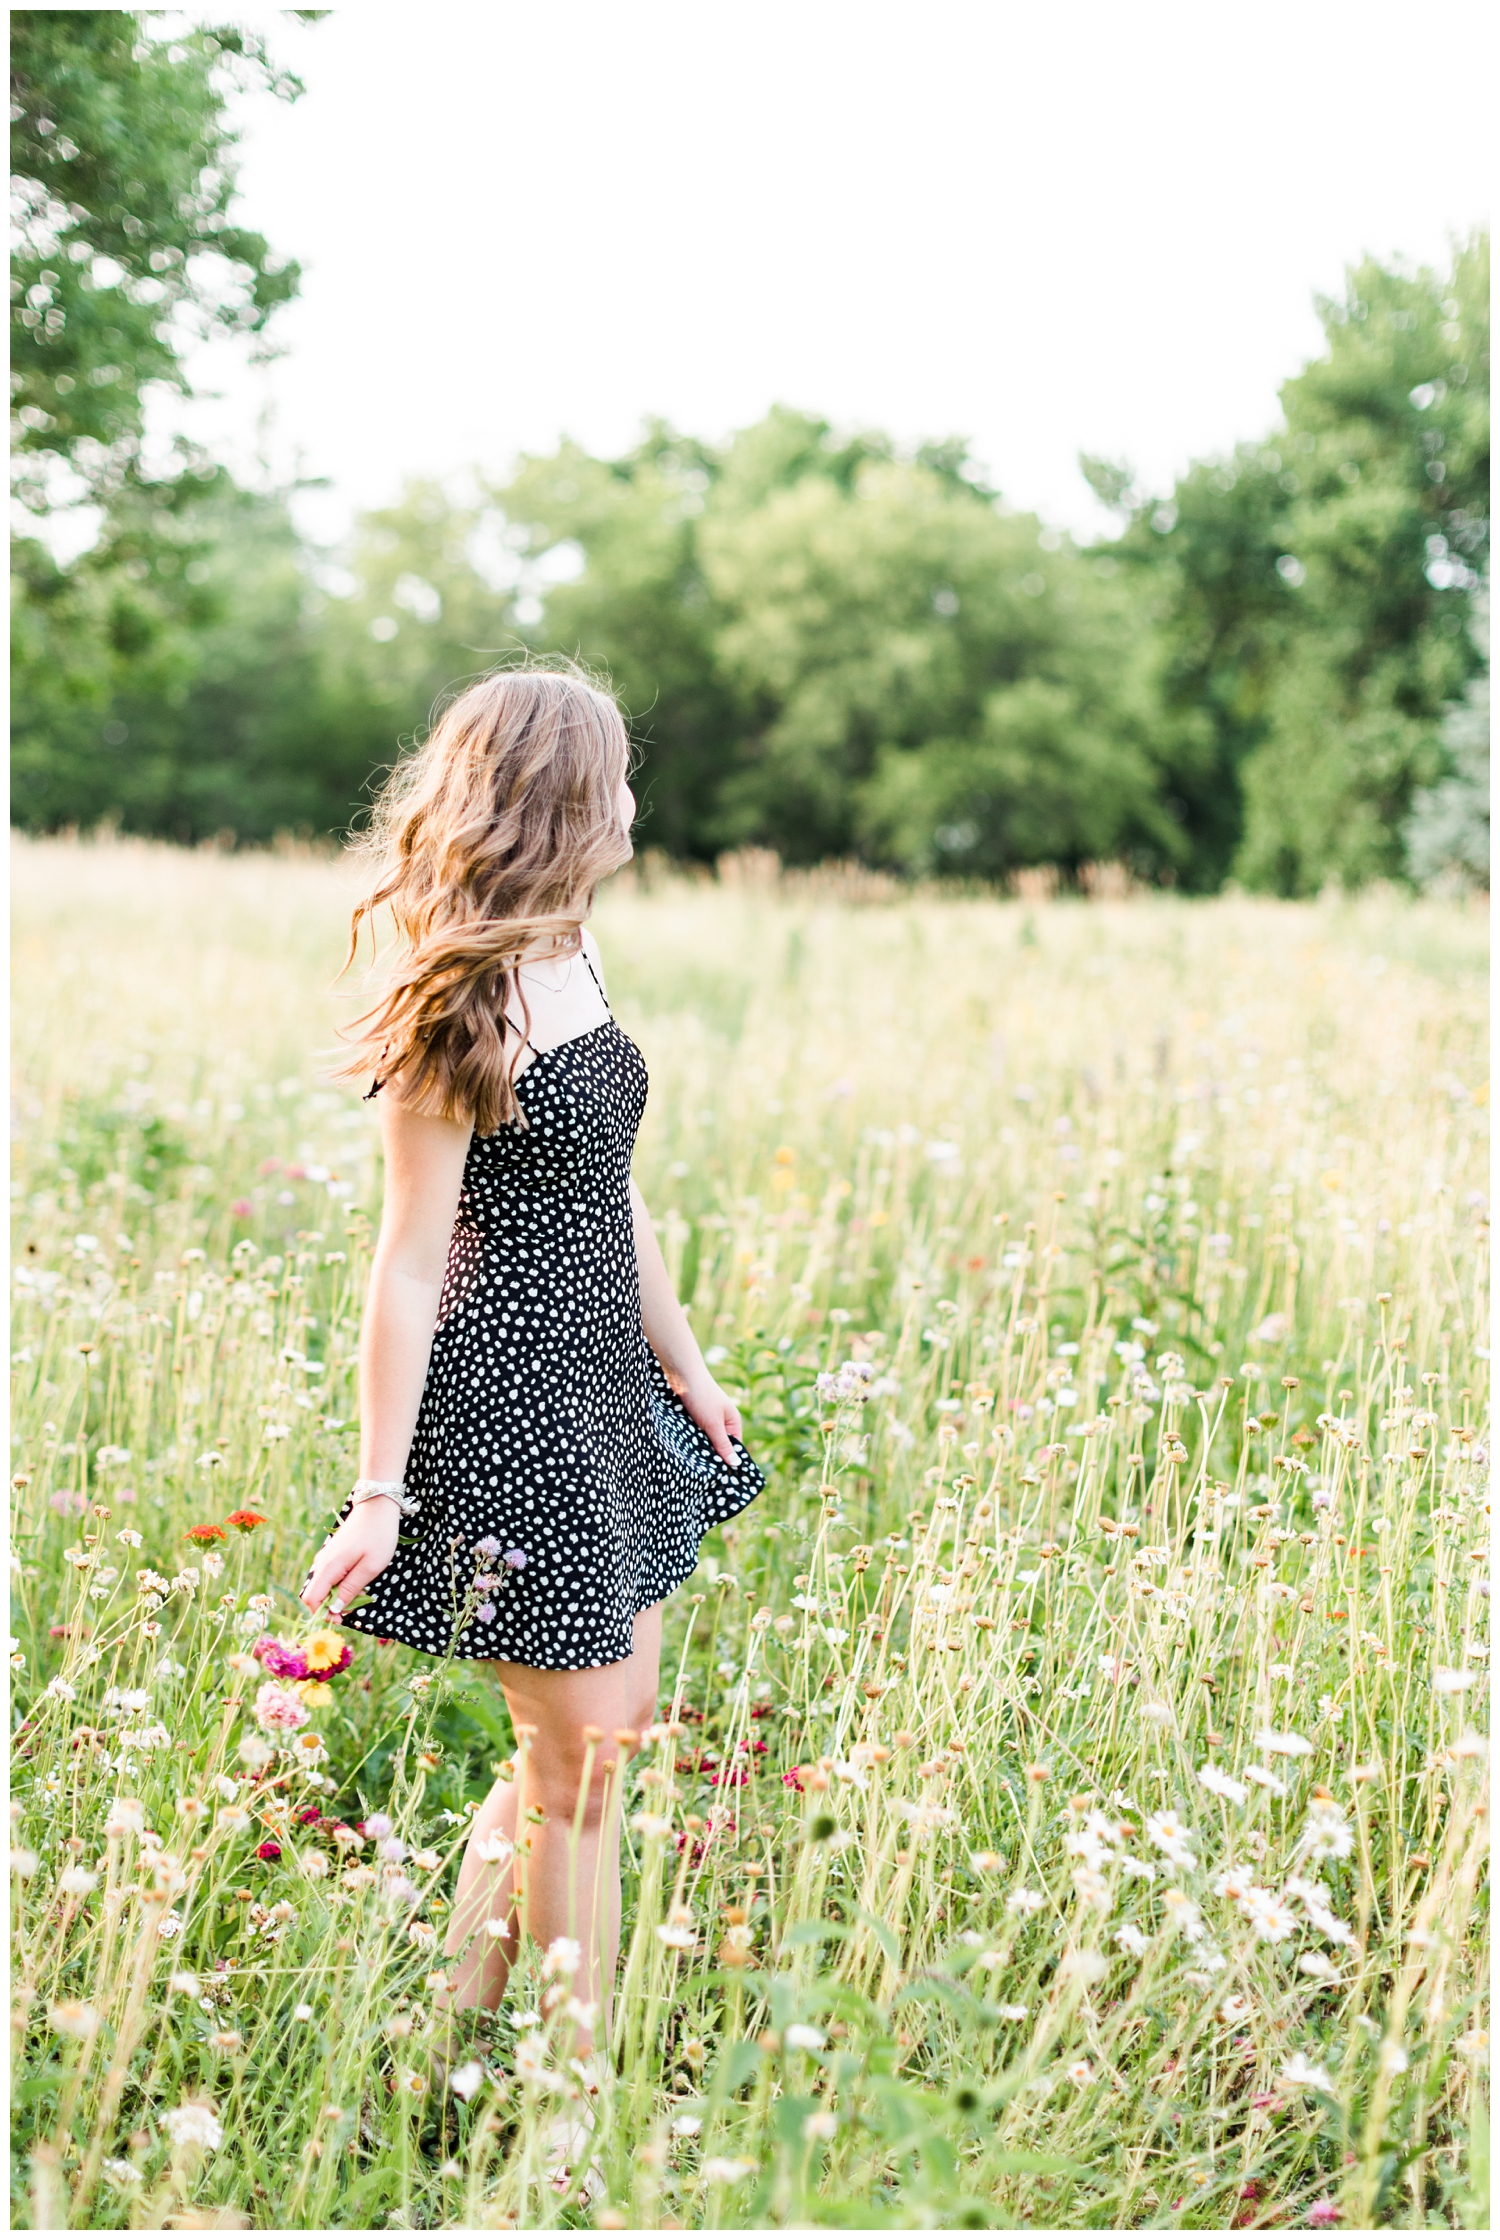 Taylor dances in a field of wildflowers | CB Studio